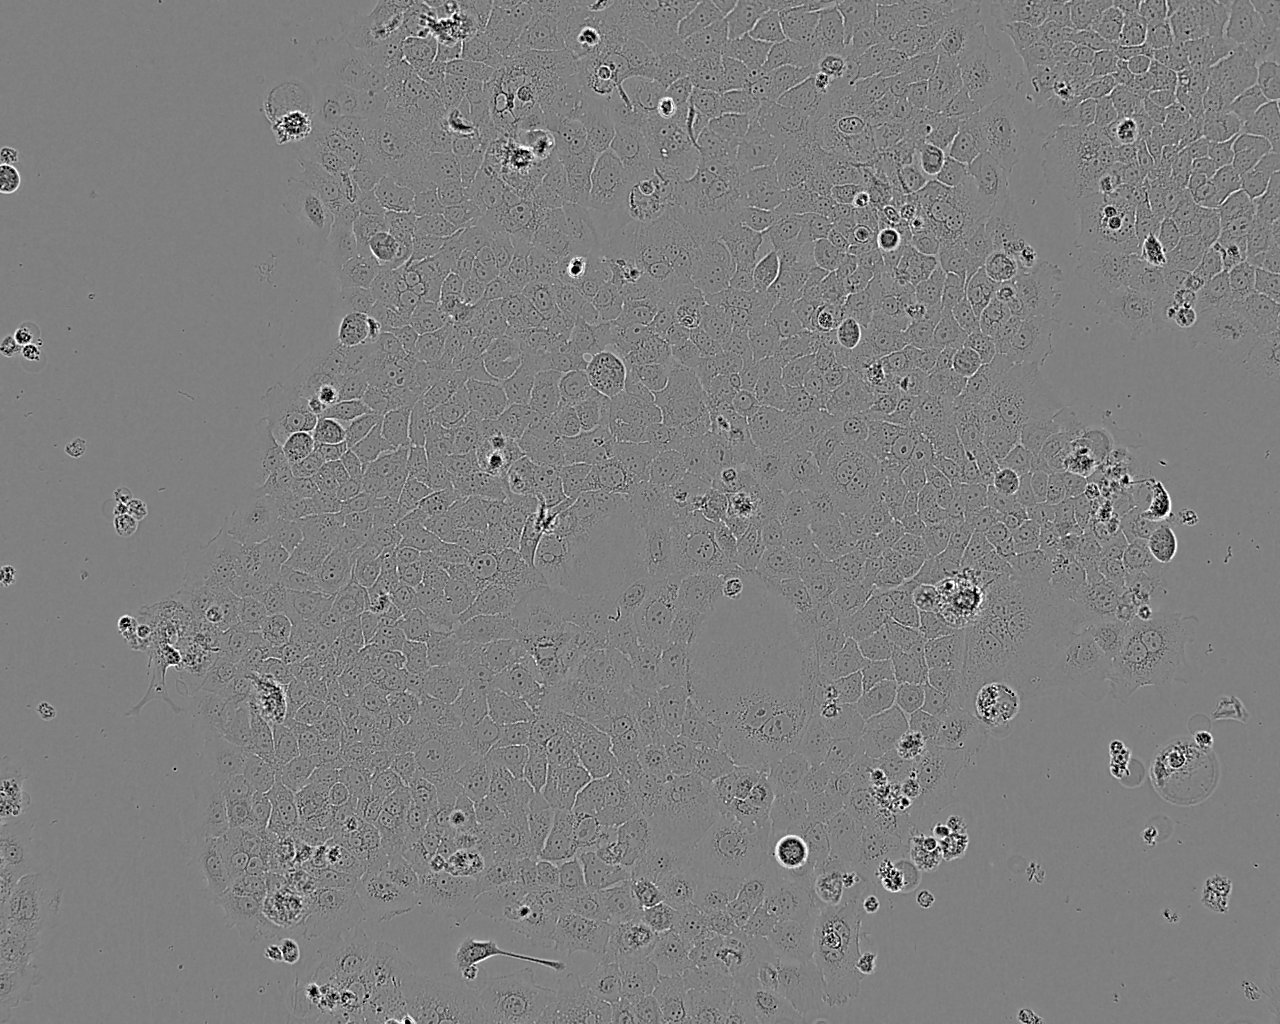 NCI-H1573 epithelioid cells人肺癌腺癌细胞系,NCI-H1573 epithelioid cells